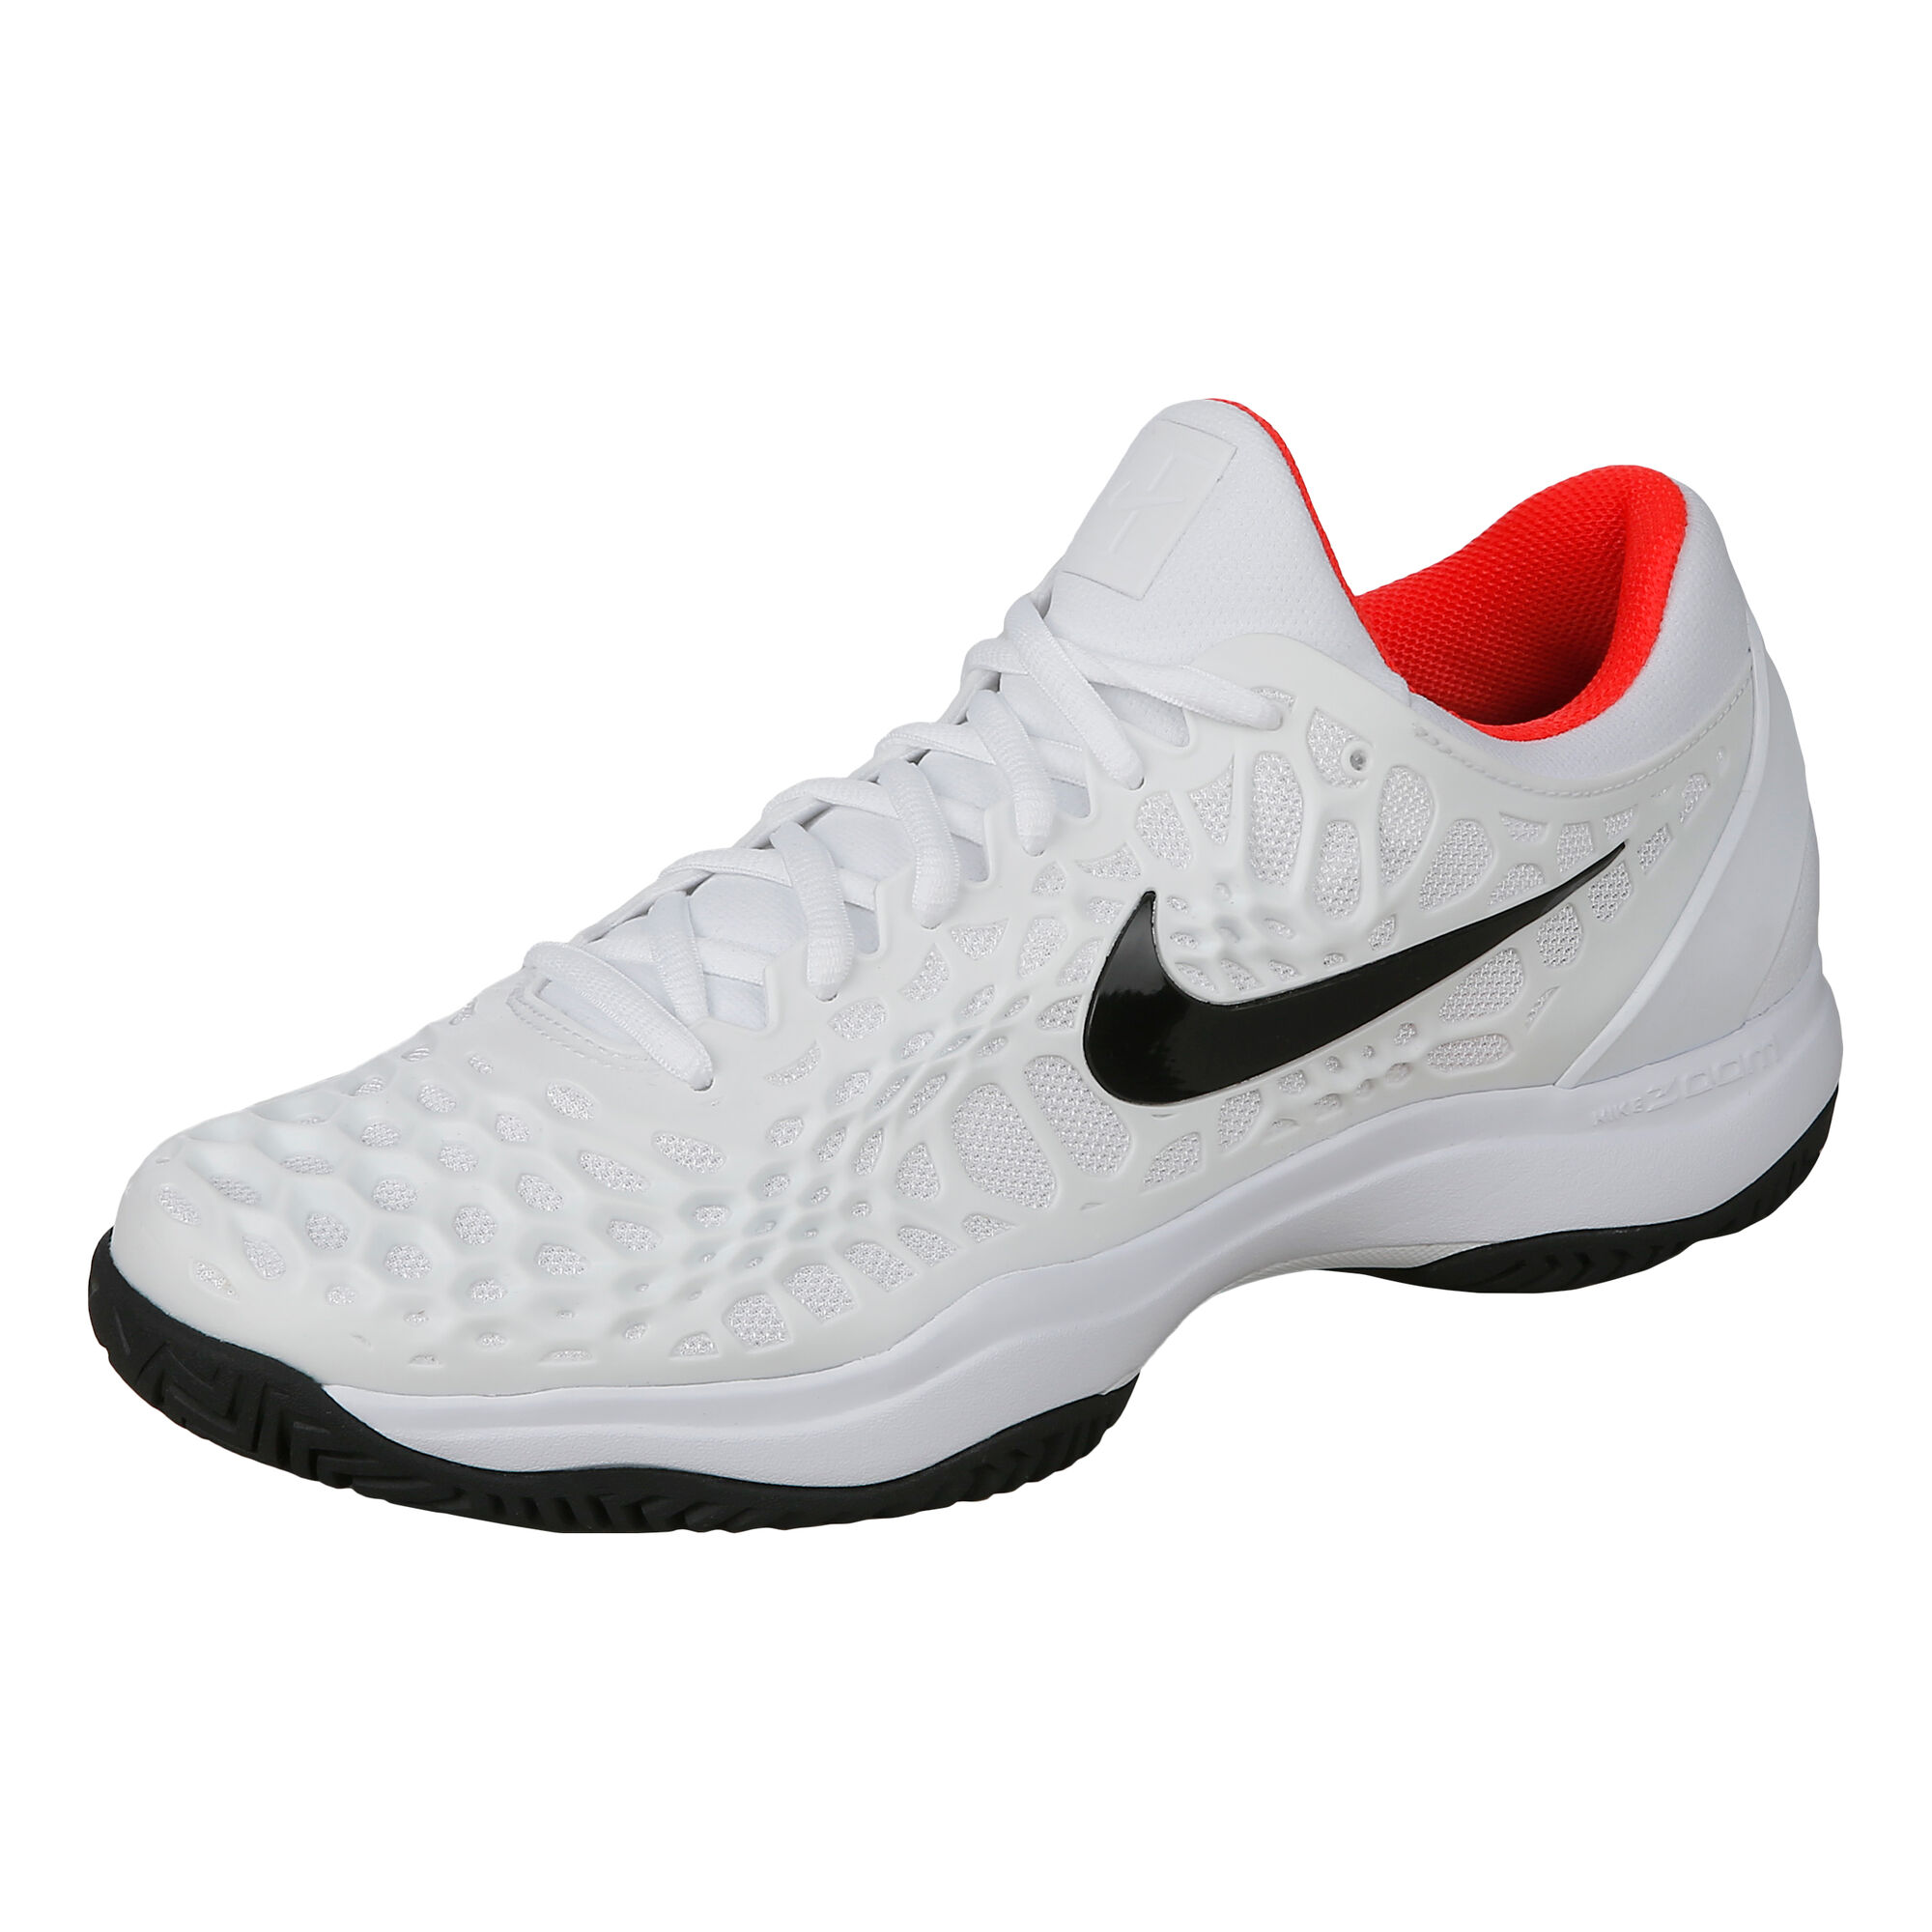 Impresión Parpadeo ocio buy Nike Air Zoom Cage 3 HC All Court Shoe Men - White, Black online |  Tennis-Point